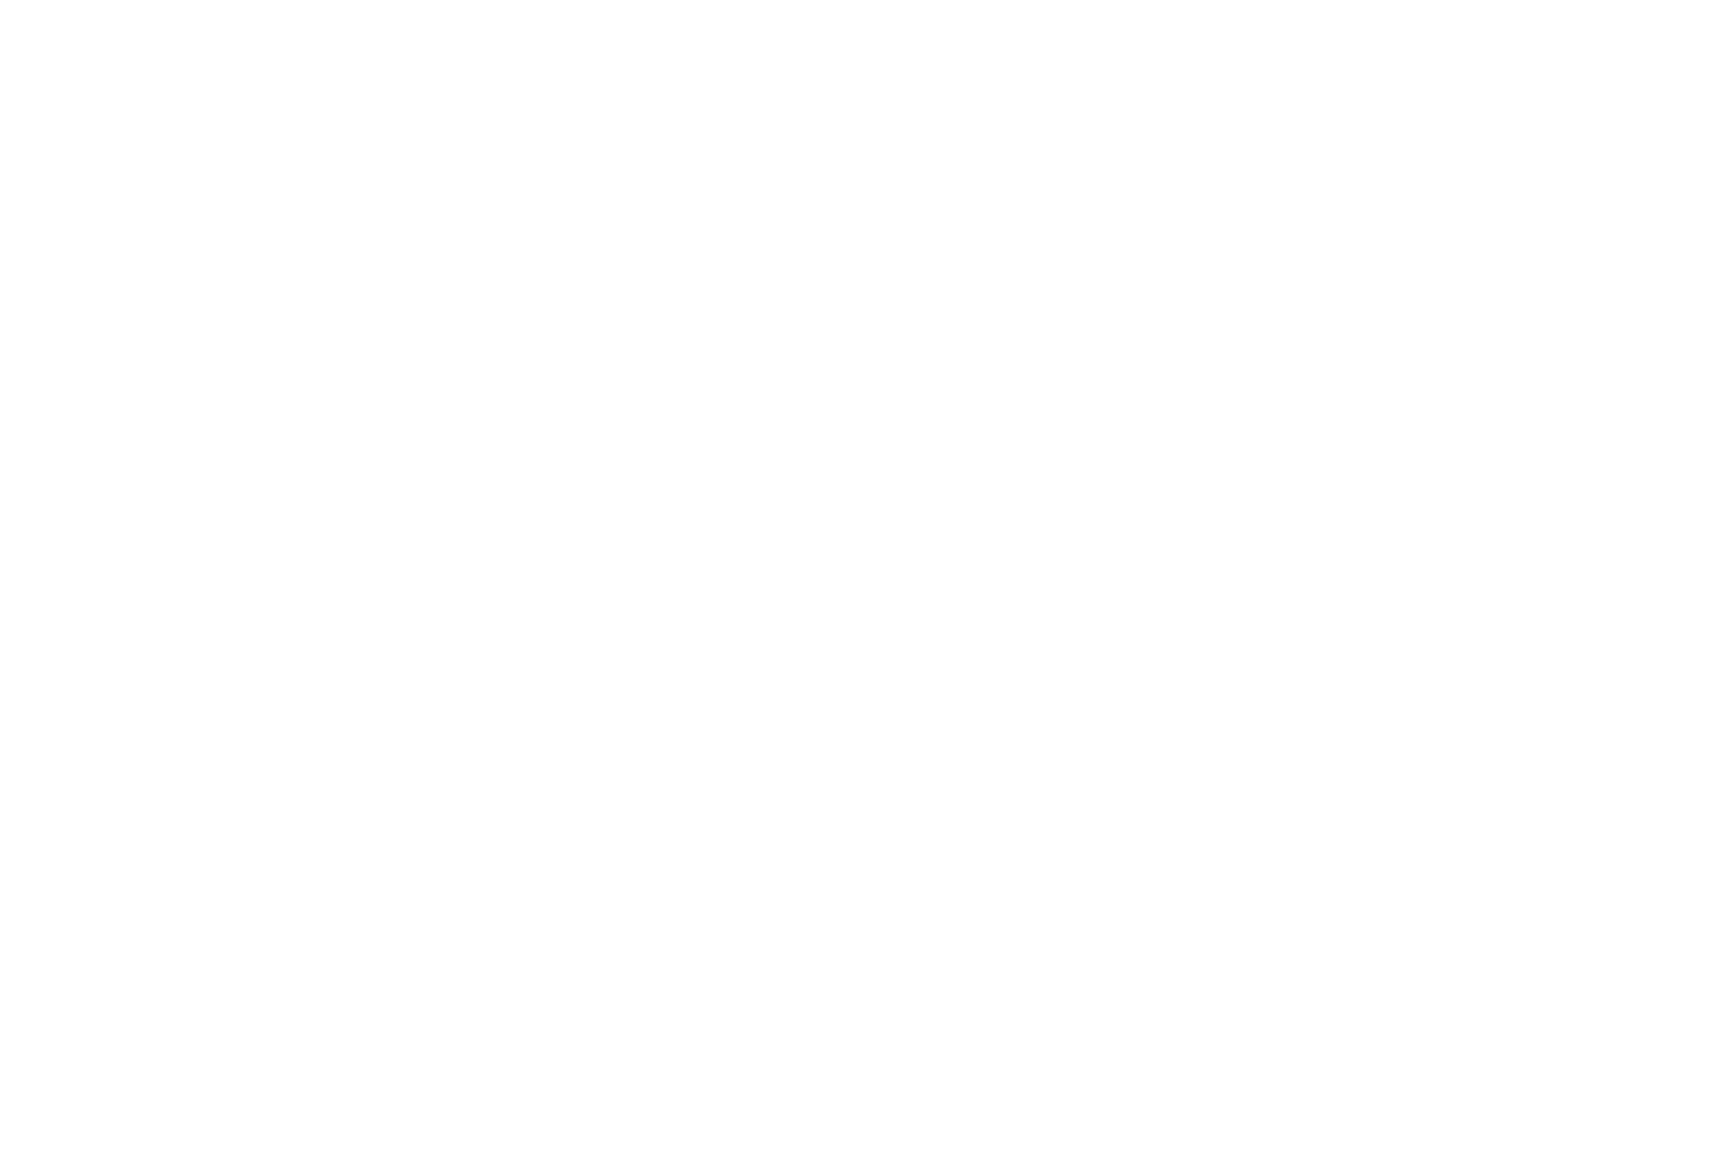 BEST POP MUSIC VIDEO - Audio Shoot International Music Video Film Festival - 2021